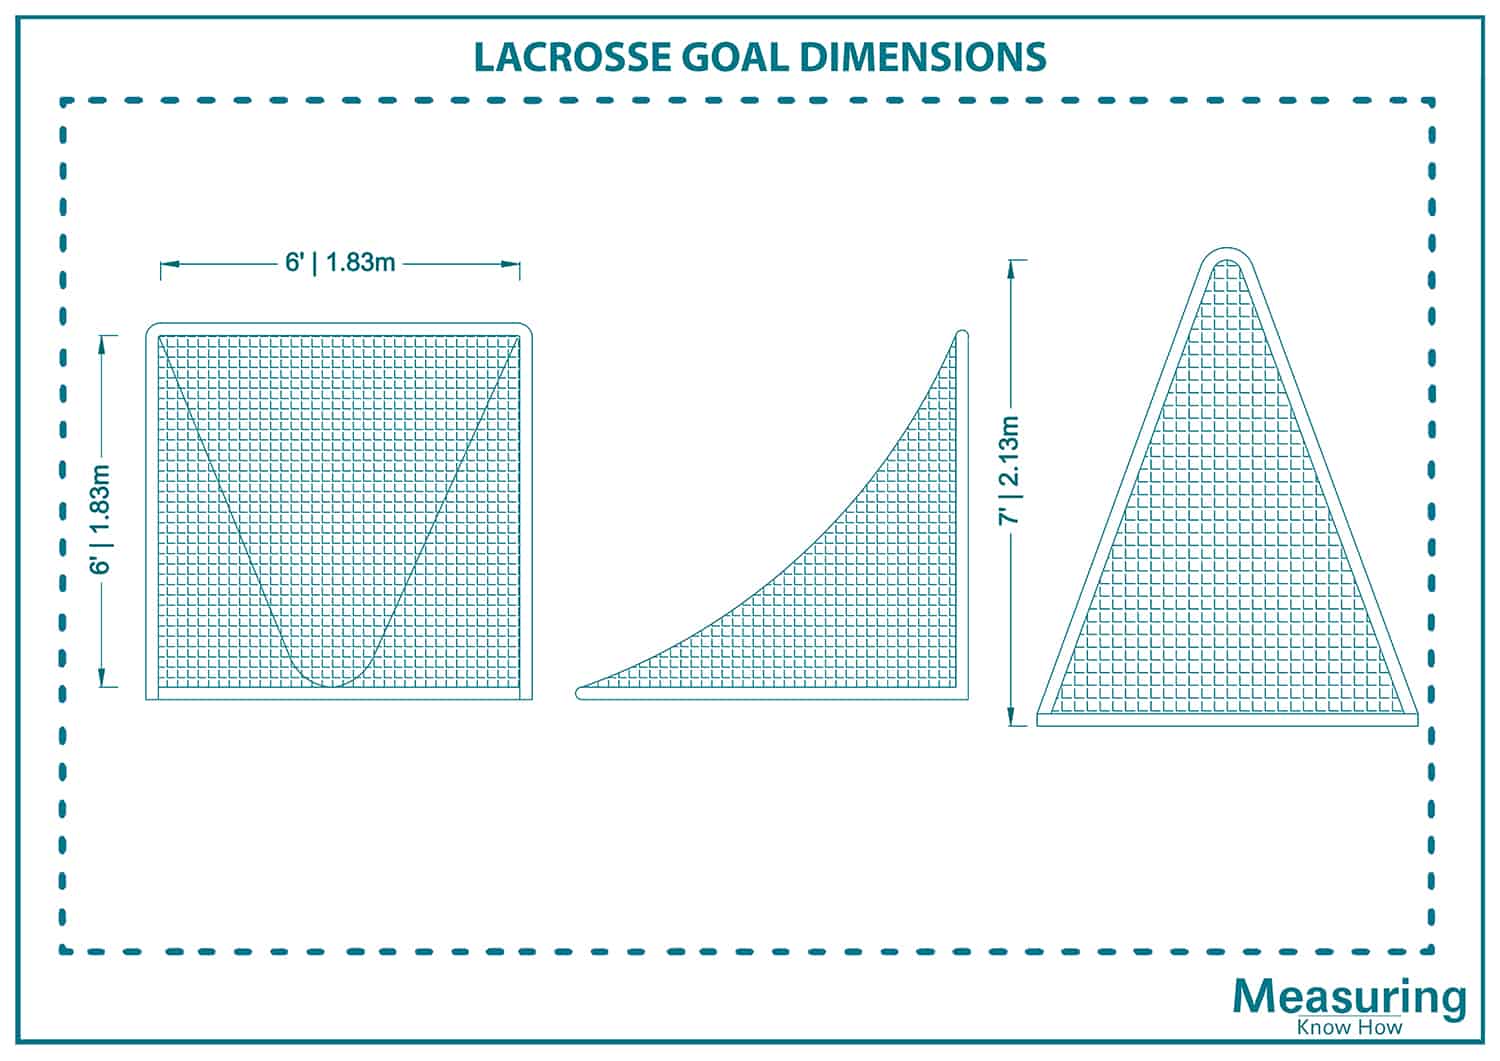 Lacrosse goal dimensions